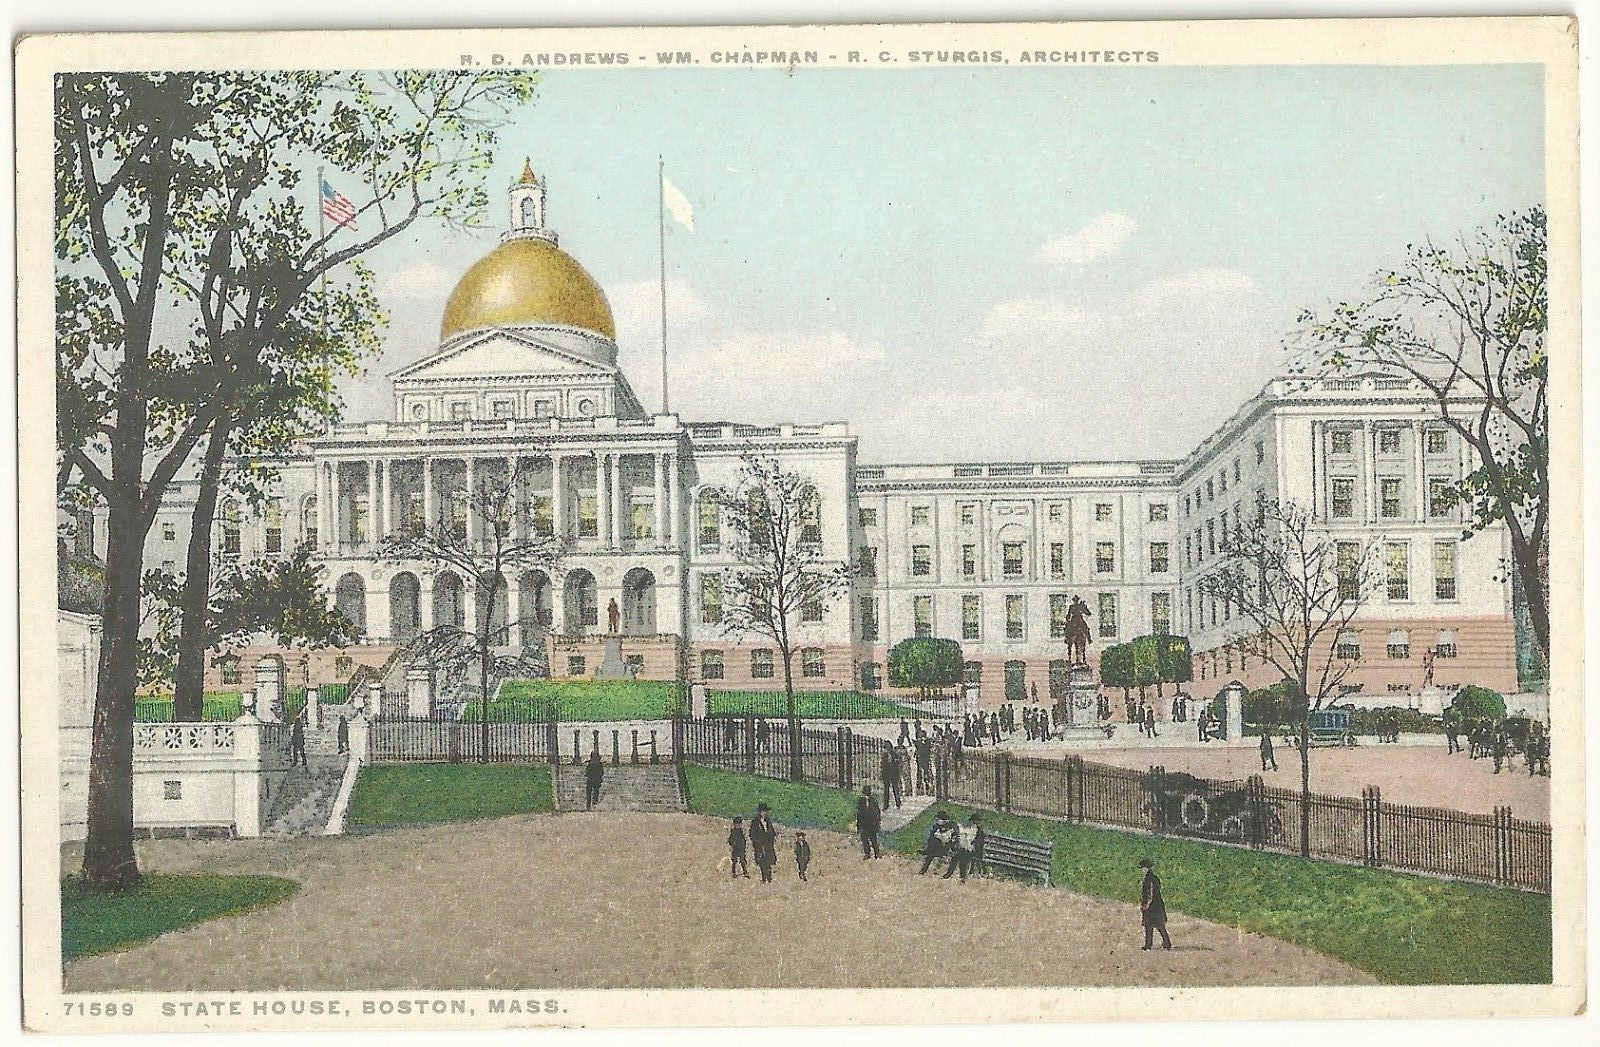 Boston, MA, VTG Postcard, State House, Architects Phostint, #71589 1910s